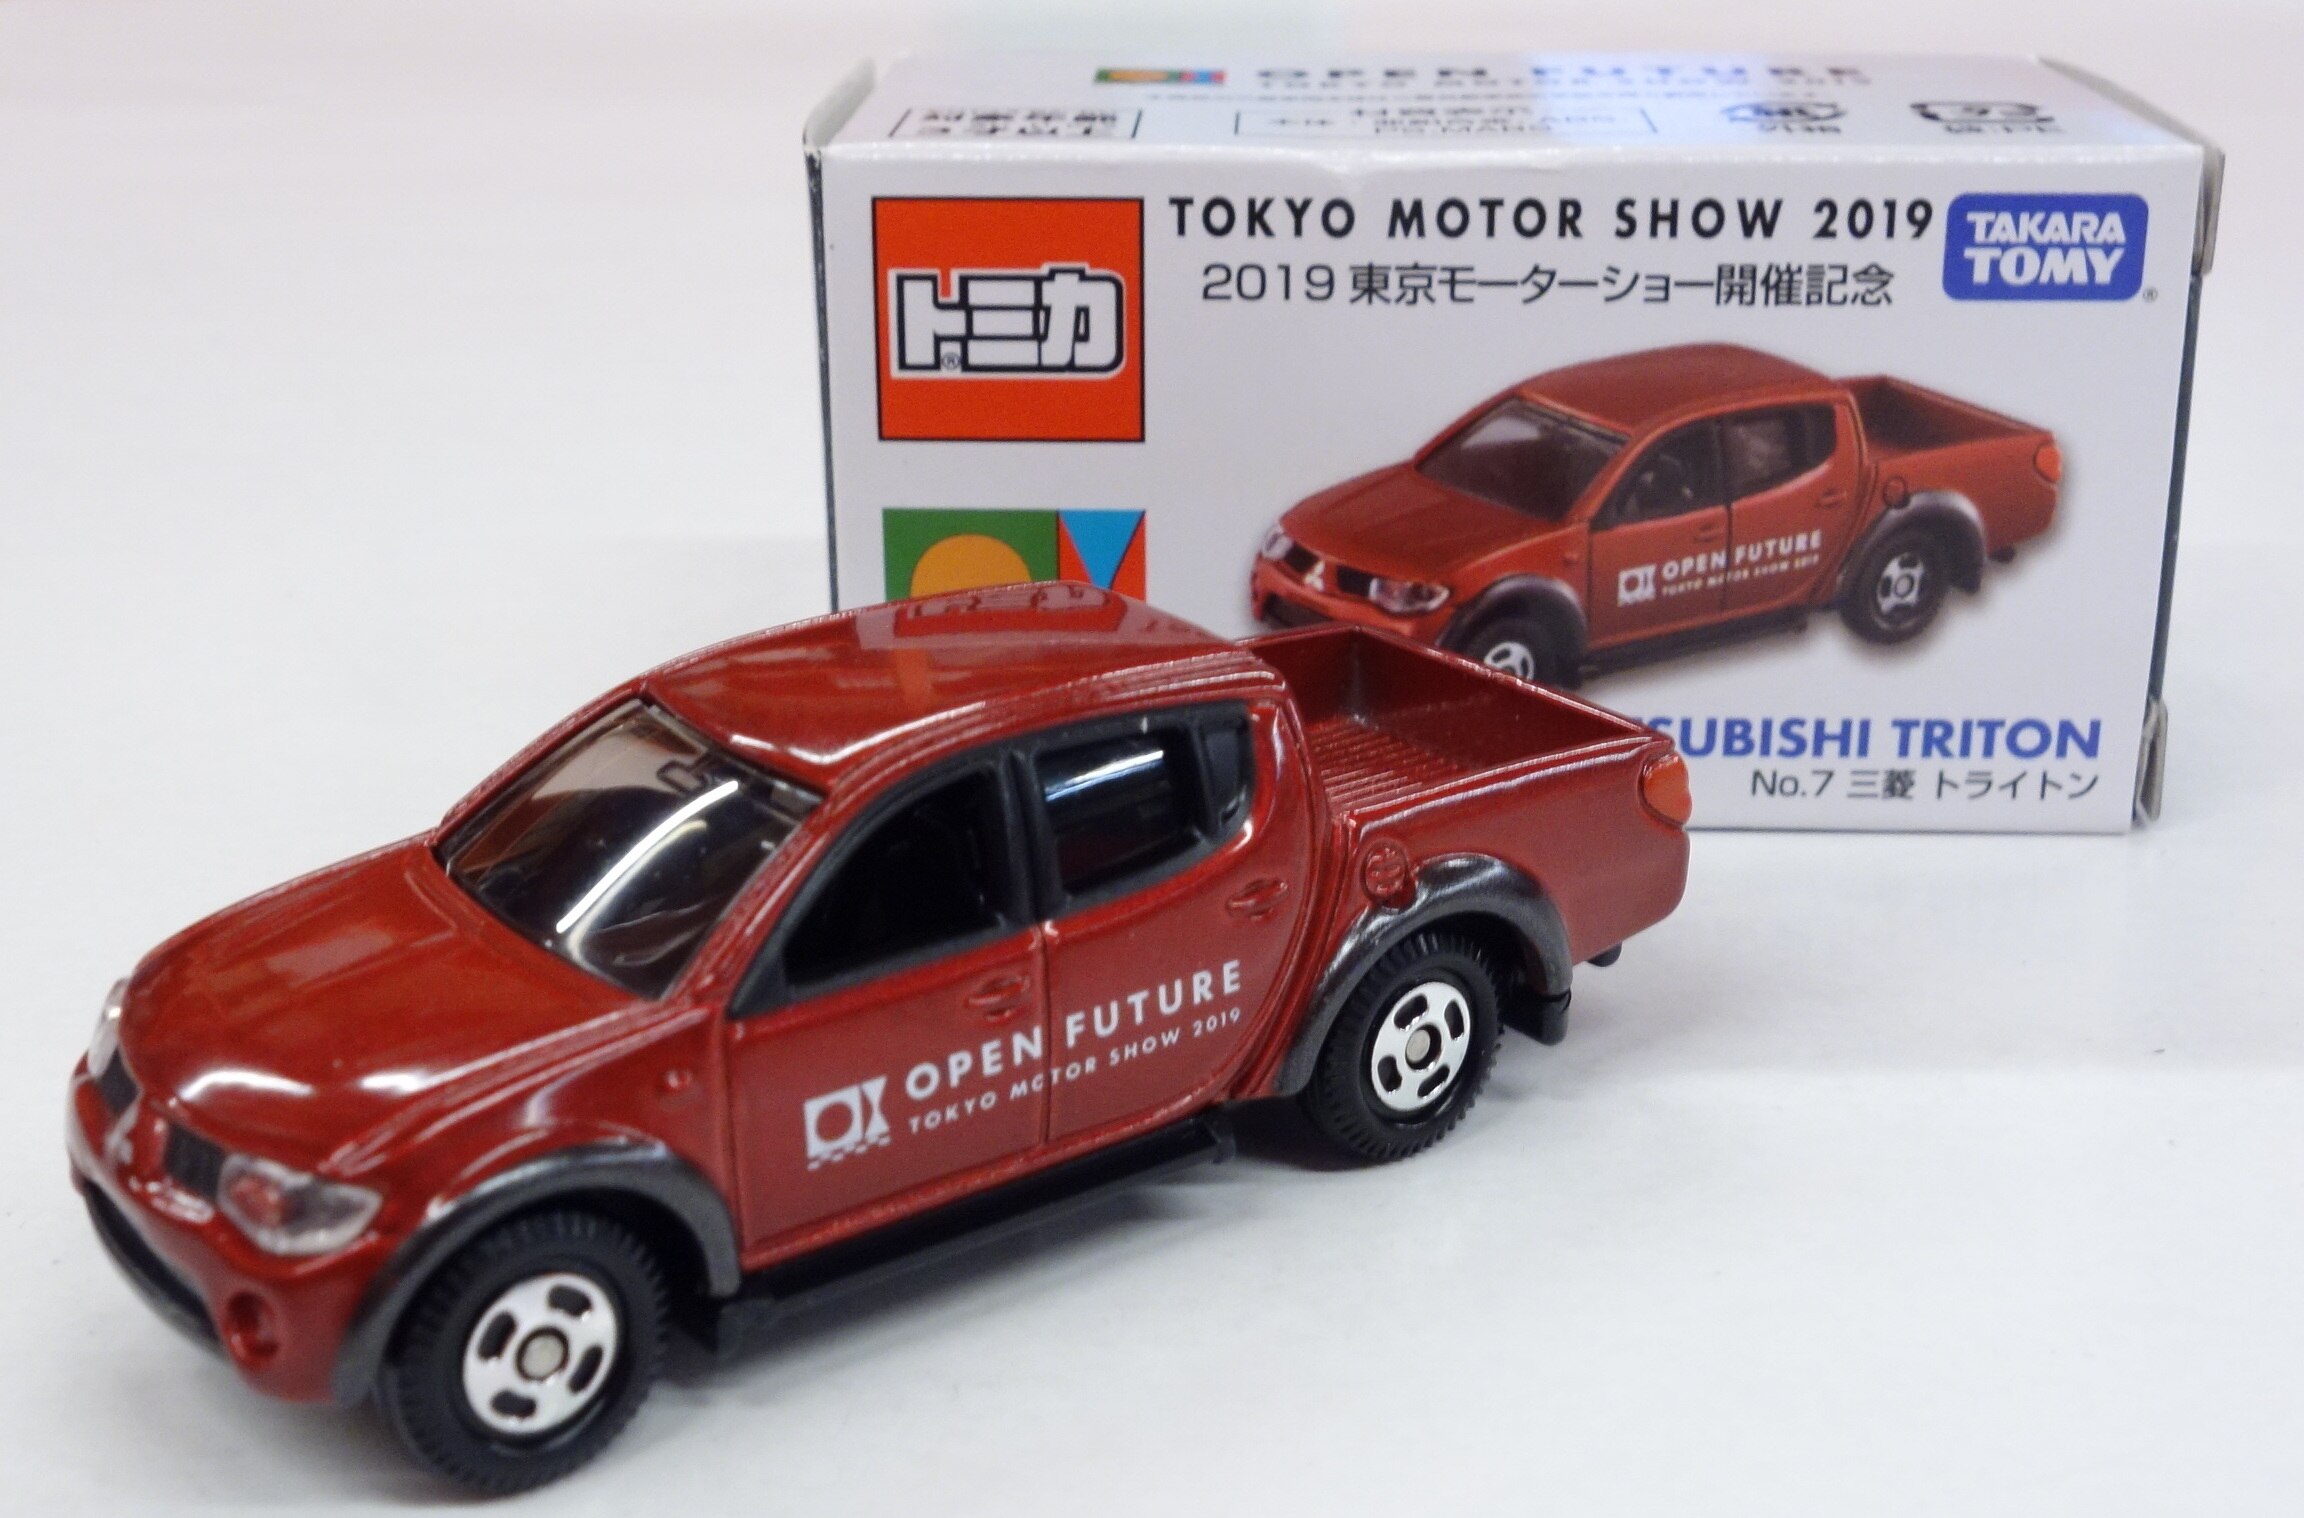 ***TSS Tomica Mitsubishi Triton 2019 Tokyo Motor Show Event Model